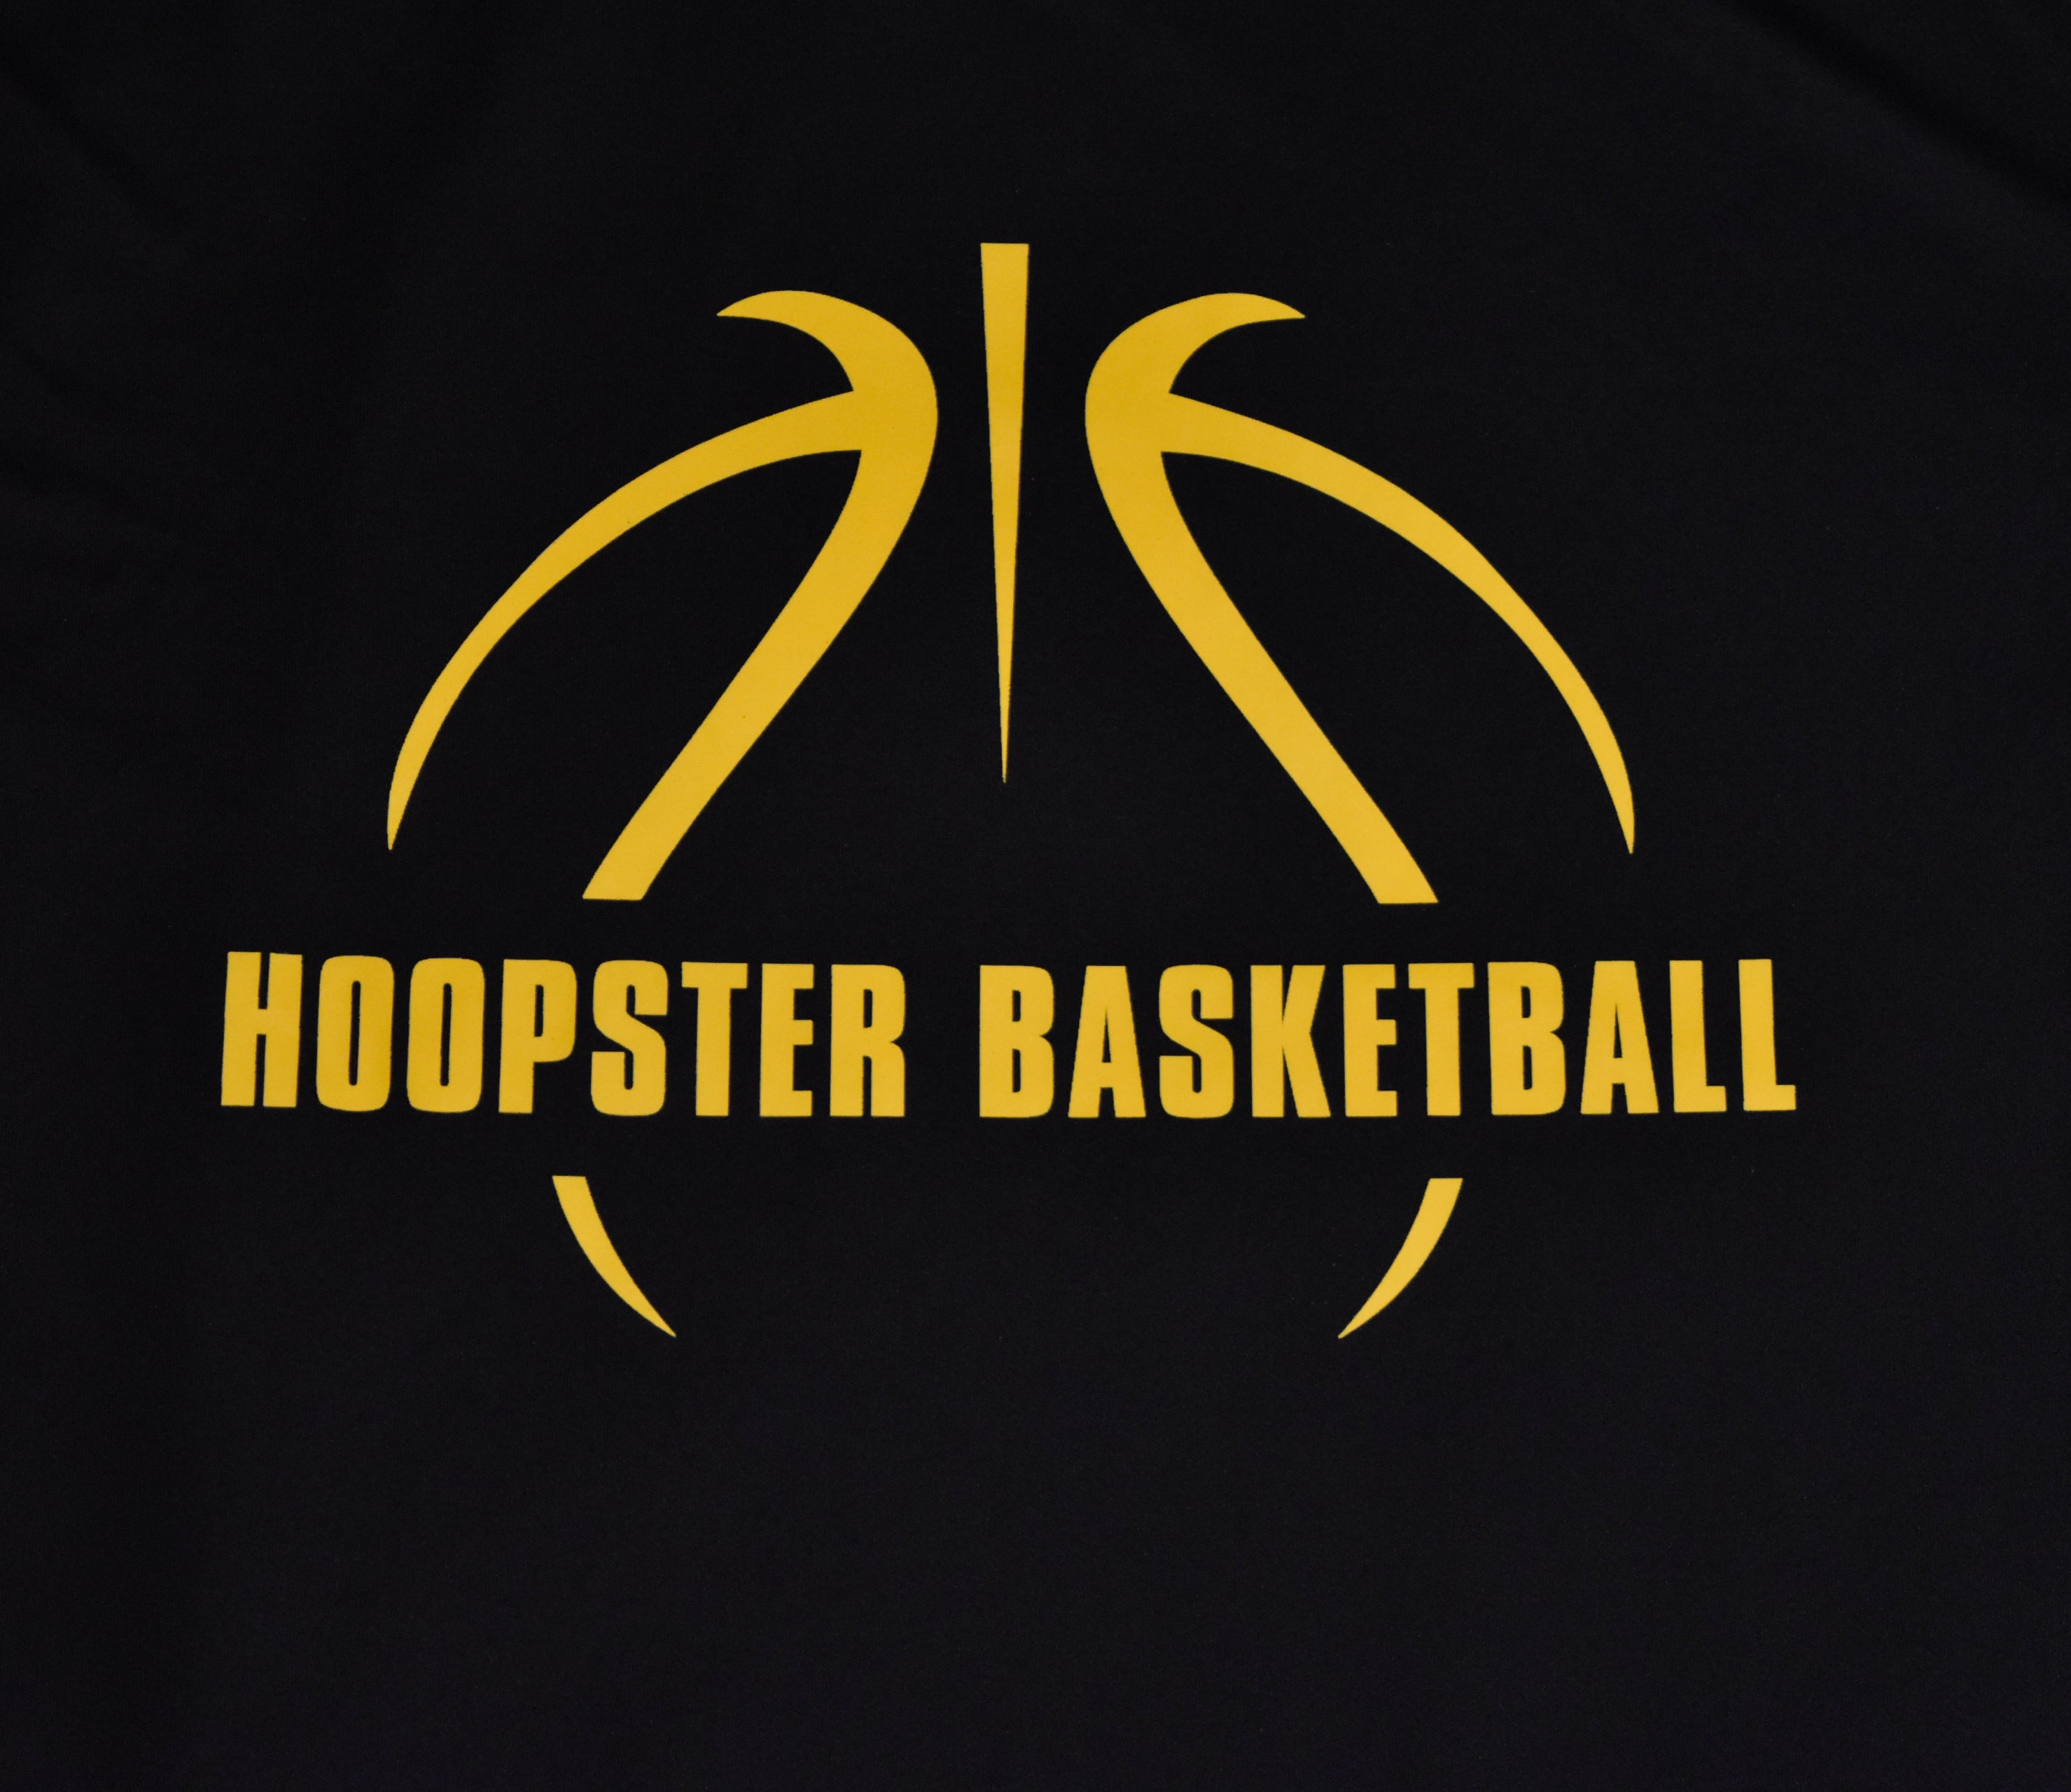 4009 Performance Long Sleeve Basketball Shooter Shirt ADULT